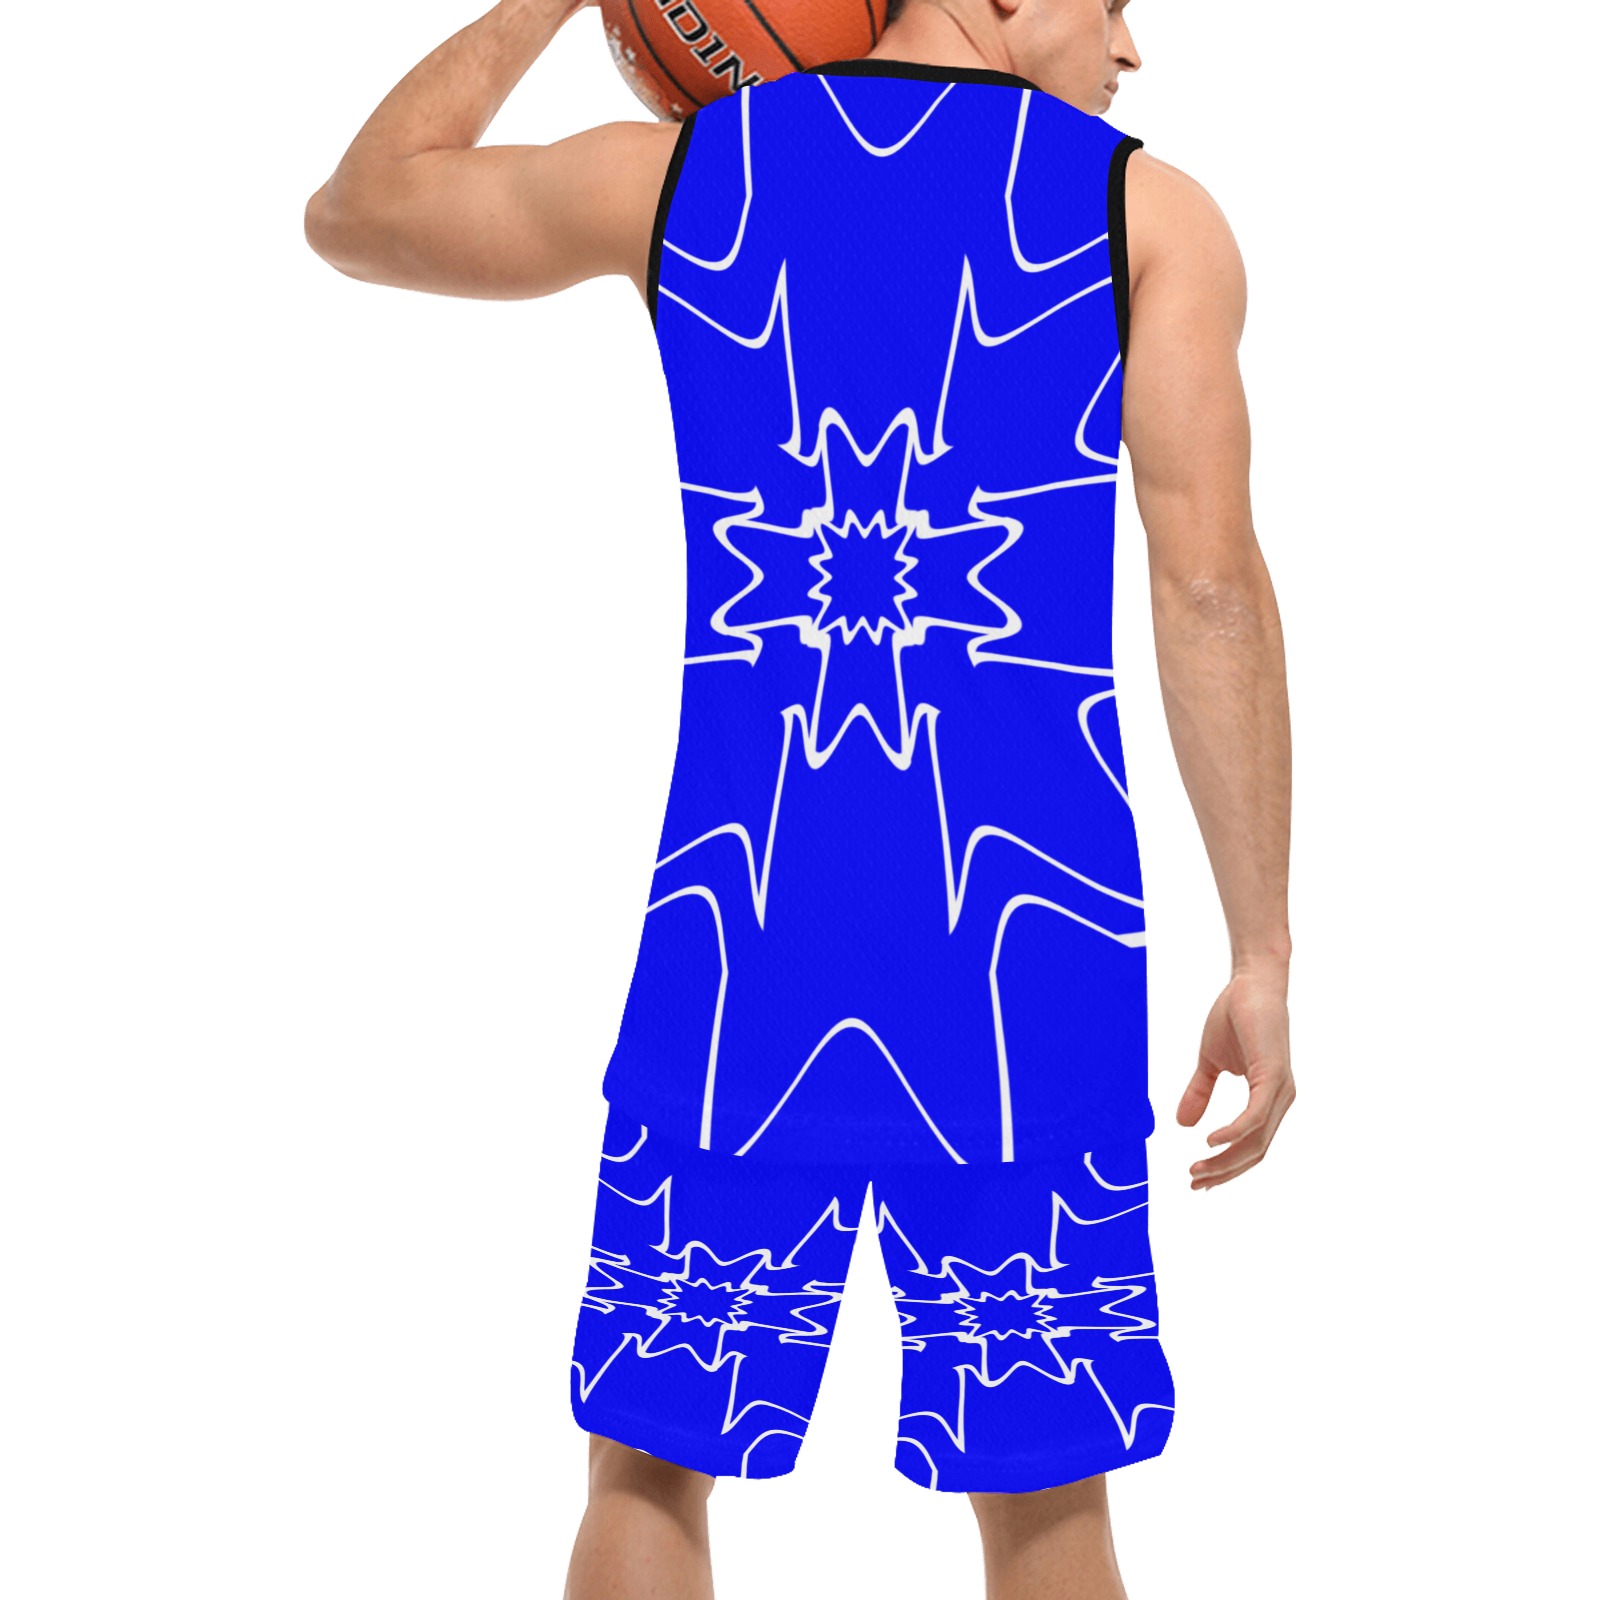 White InterlockingCrosses Starred Blue Basketball Uniform with Pocket